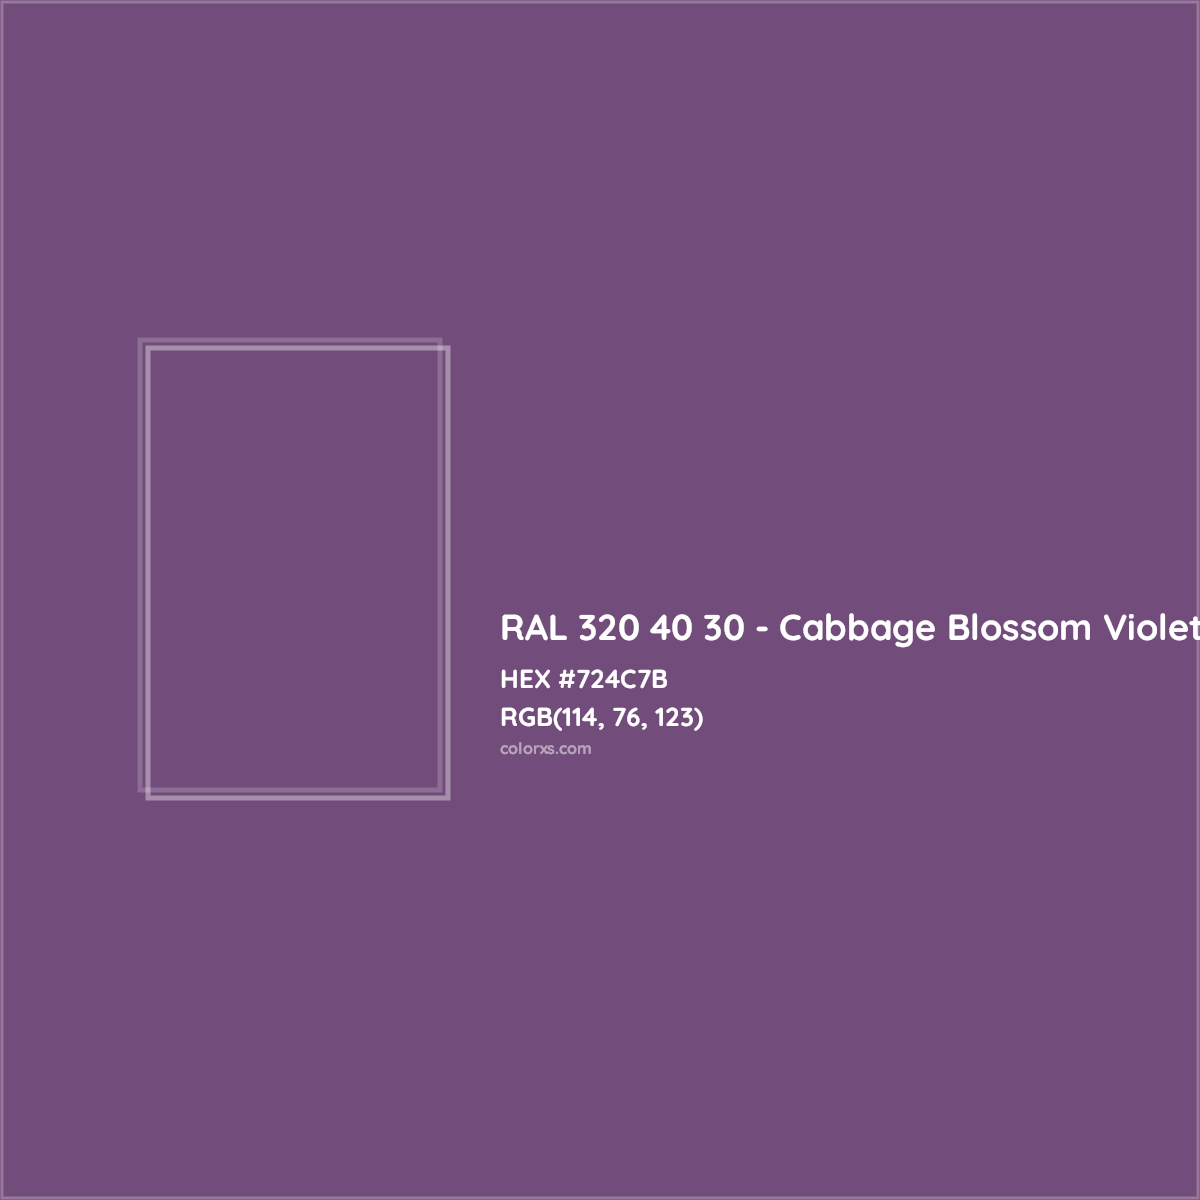 HEX #724C7B RAL 320 40 30 - Cabbage Blossom Violet CMS RAL Design - Color Code